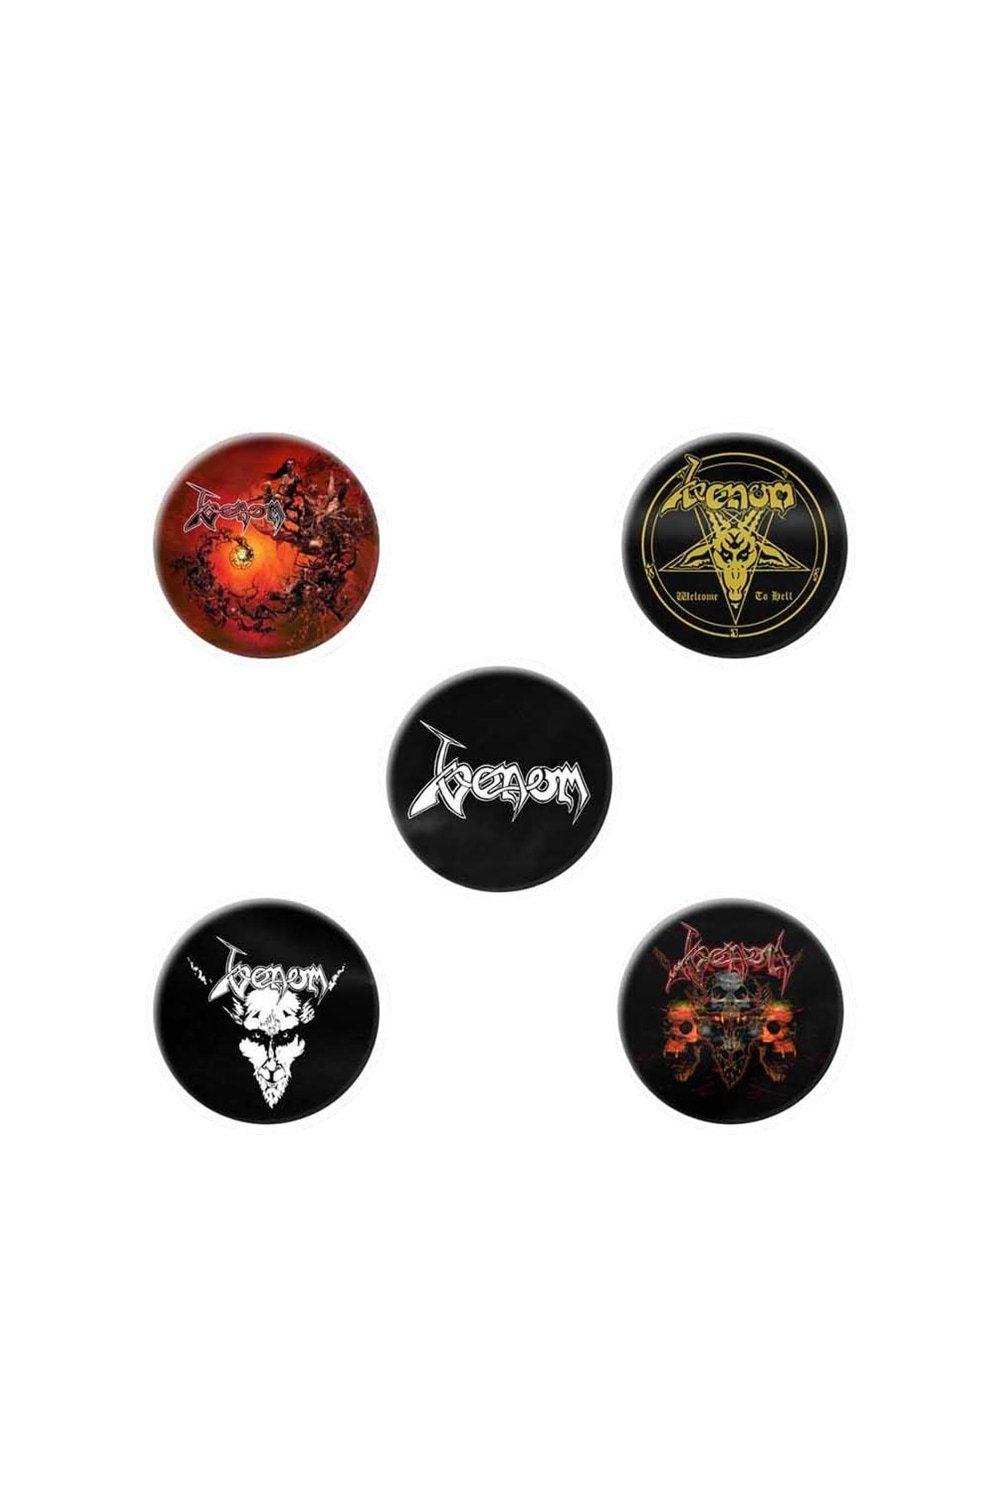 Black Metal Badge Set (Pack of 5)